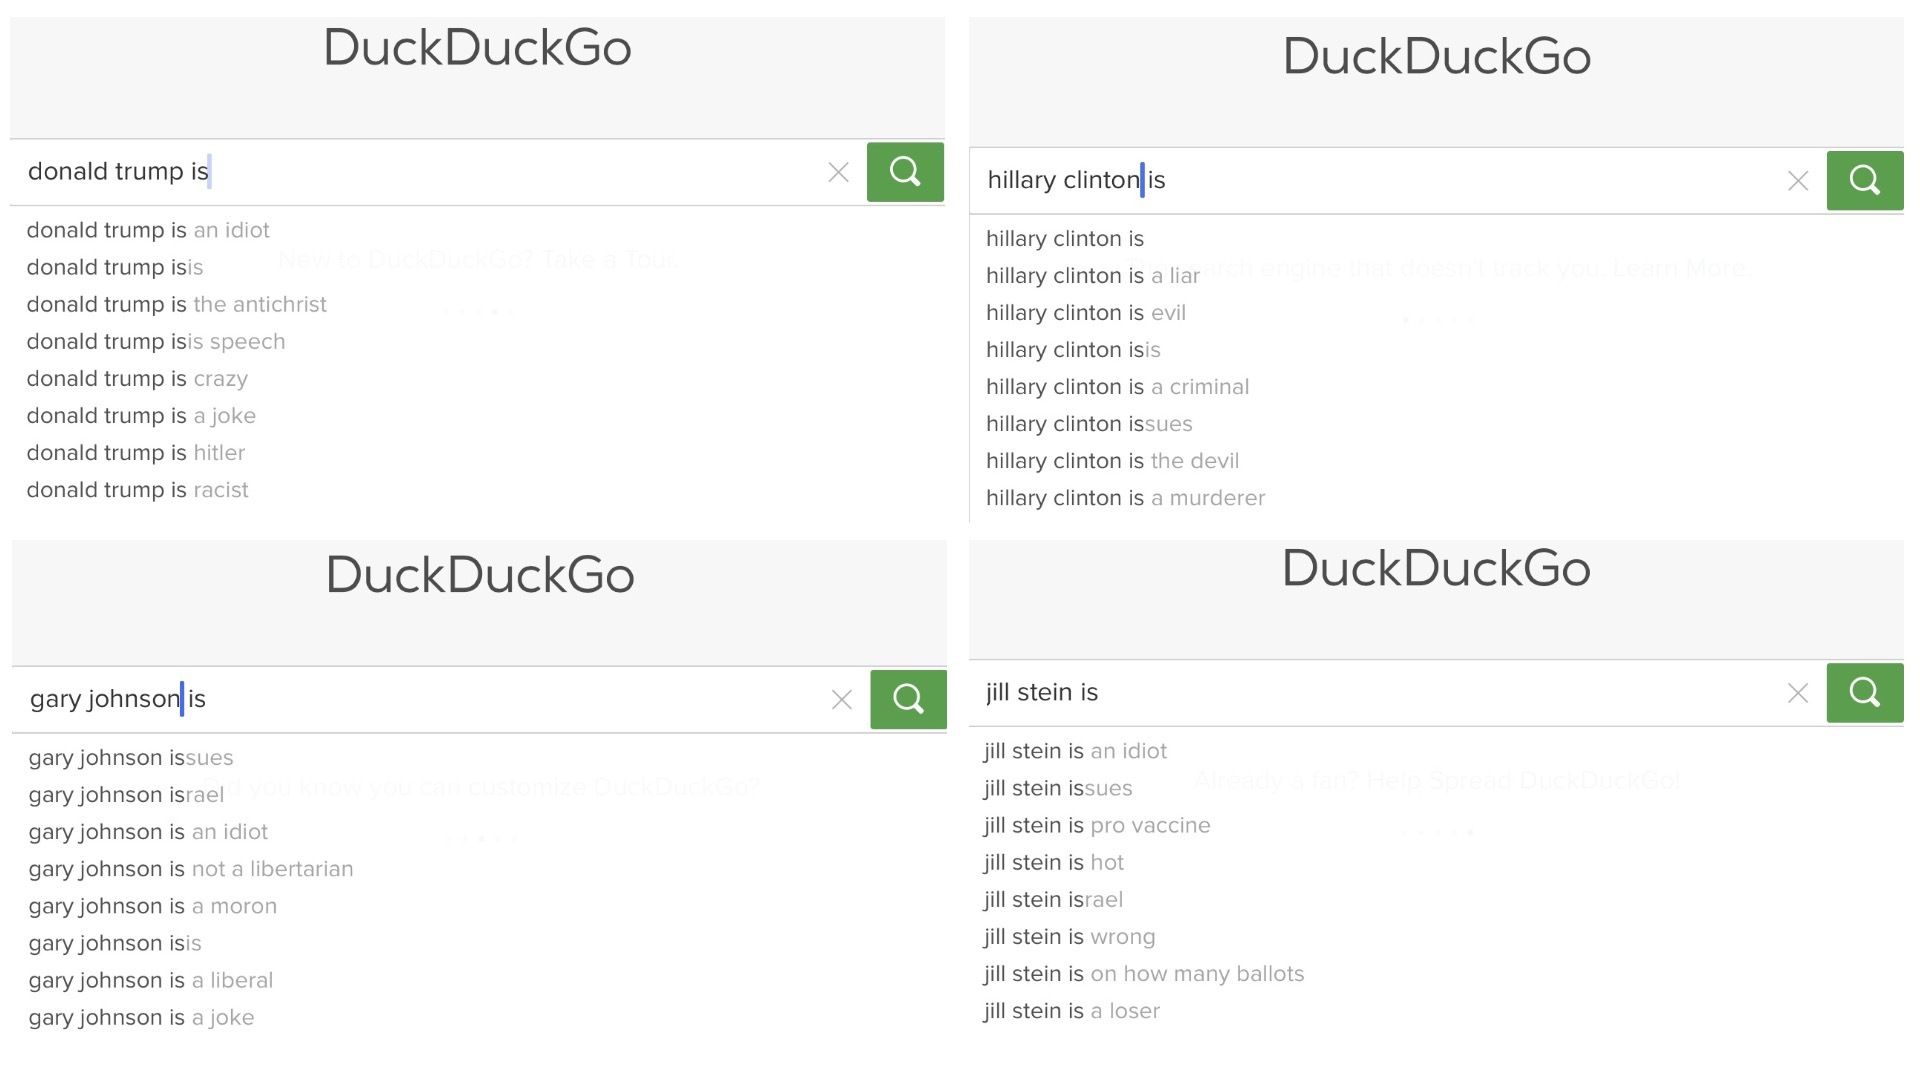 DuckDuckGo Candidates